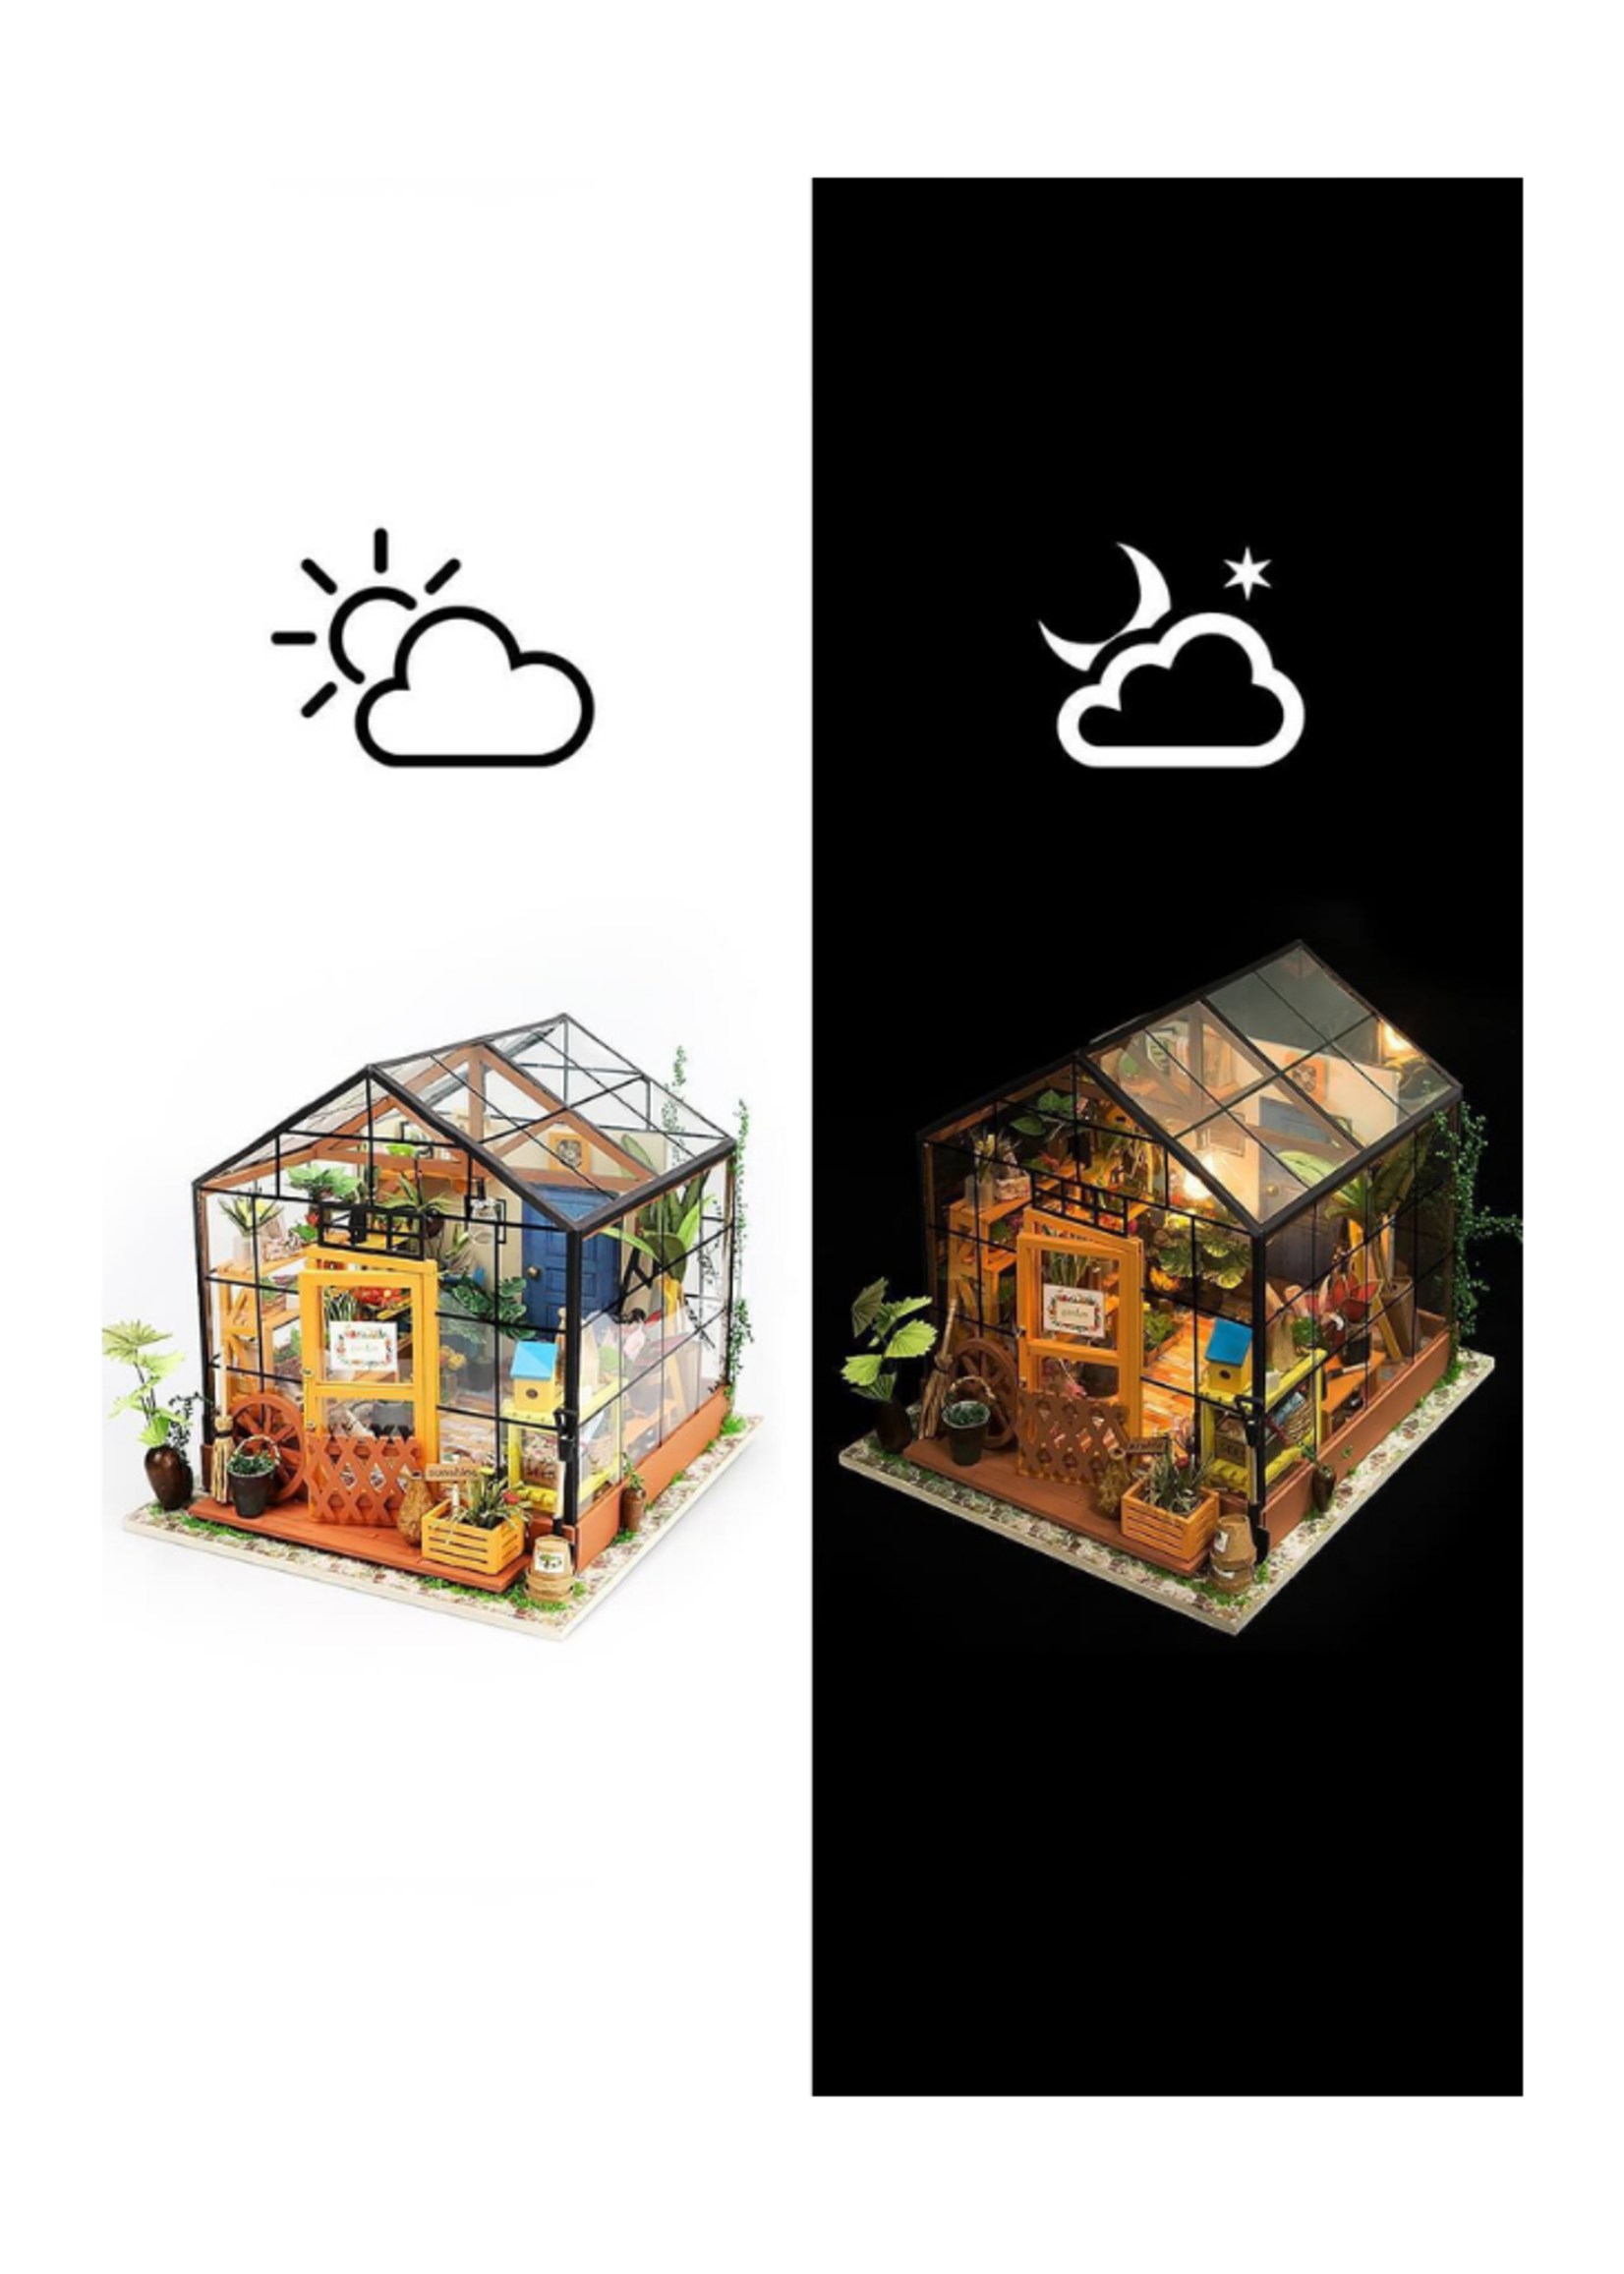 Hands Craft DIY Miniature House Kit: Cathy's Flower House